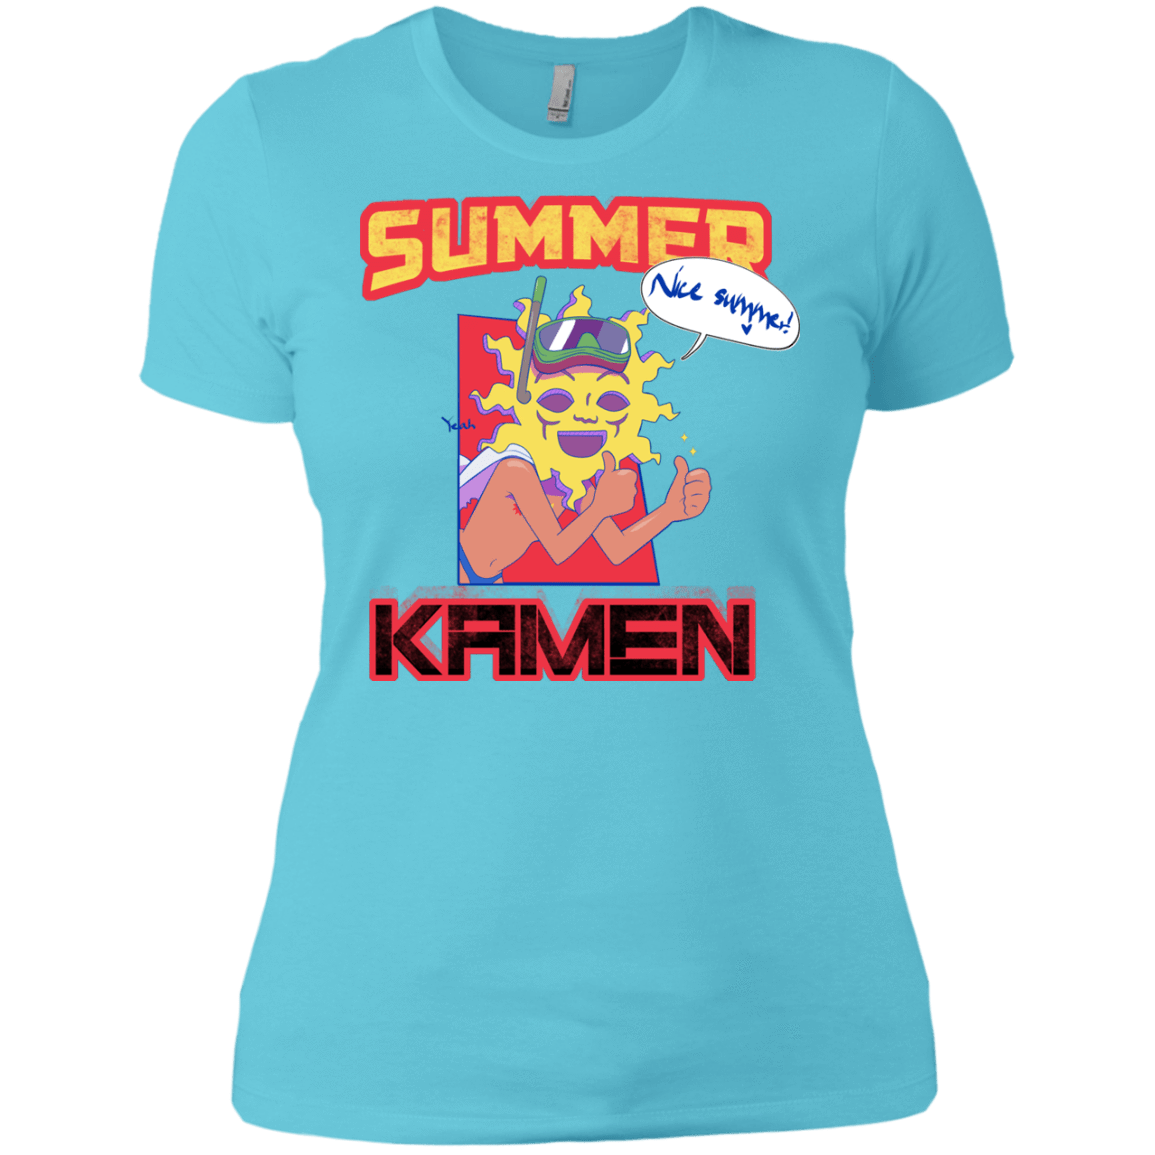 T-Shirts Cancun / X-Small Summer Kamen Women's Premium T-Shirt